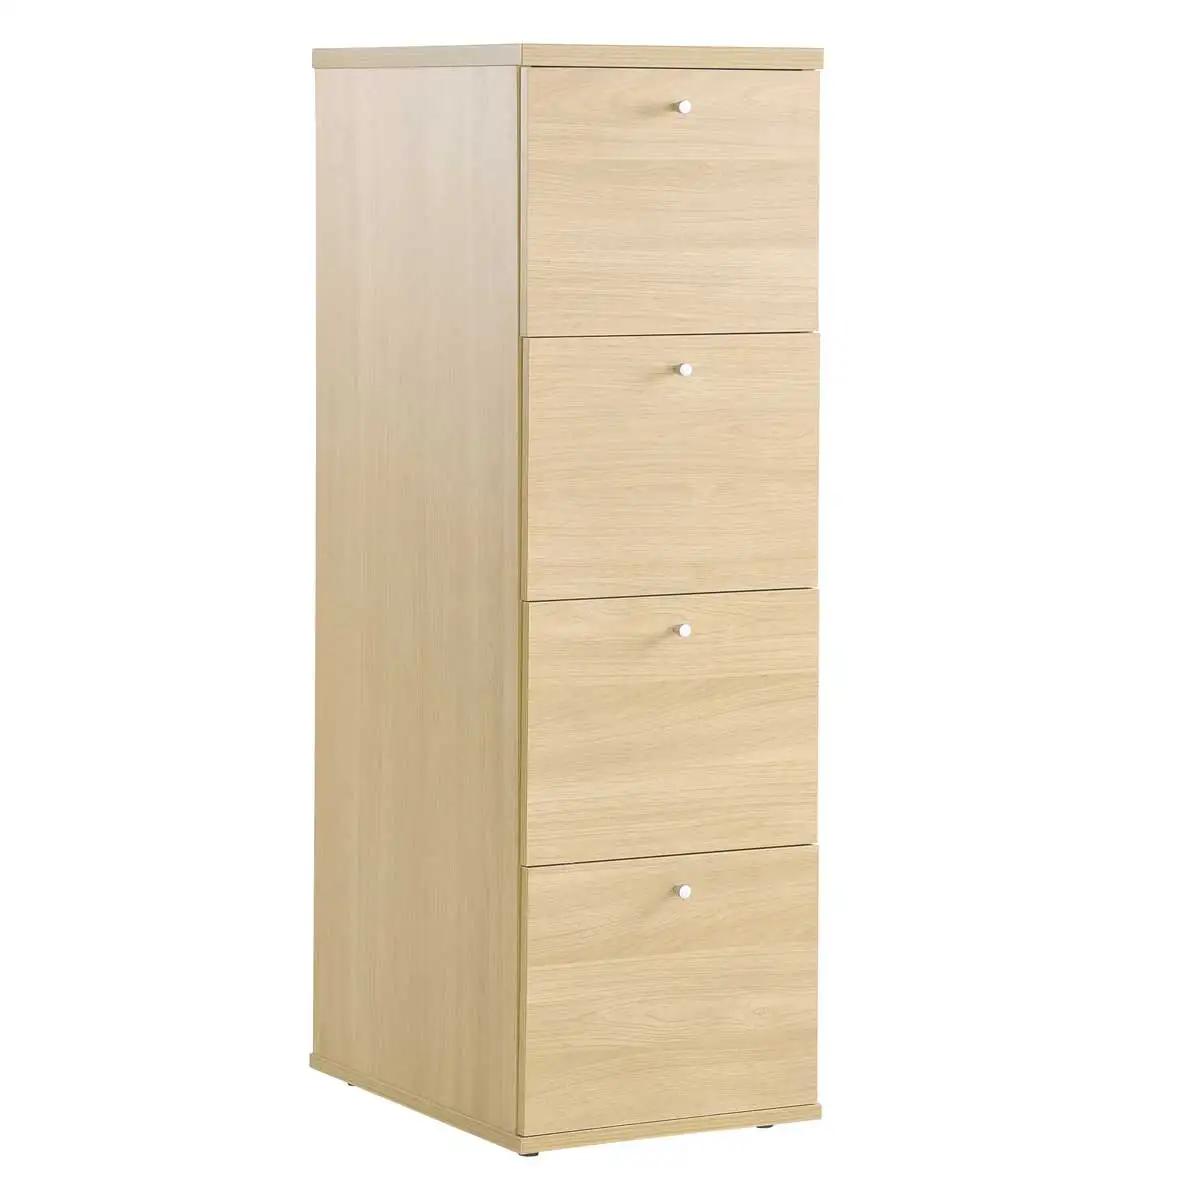 4 Drawer Wood Filing Cabinet Smart Office Furniture Range View